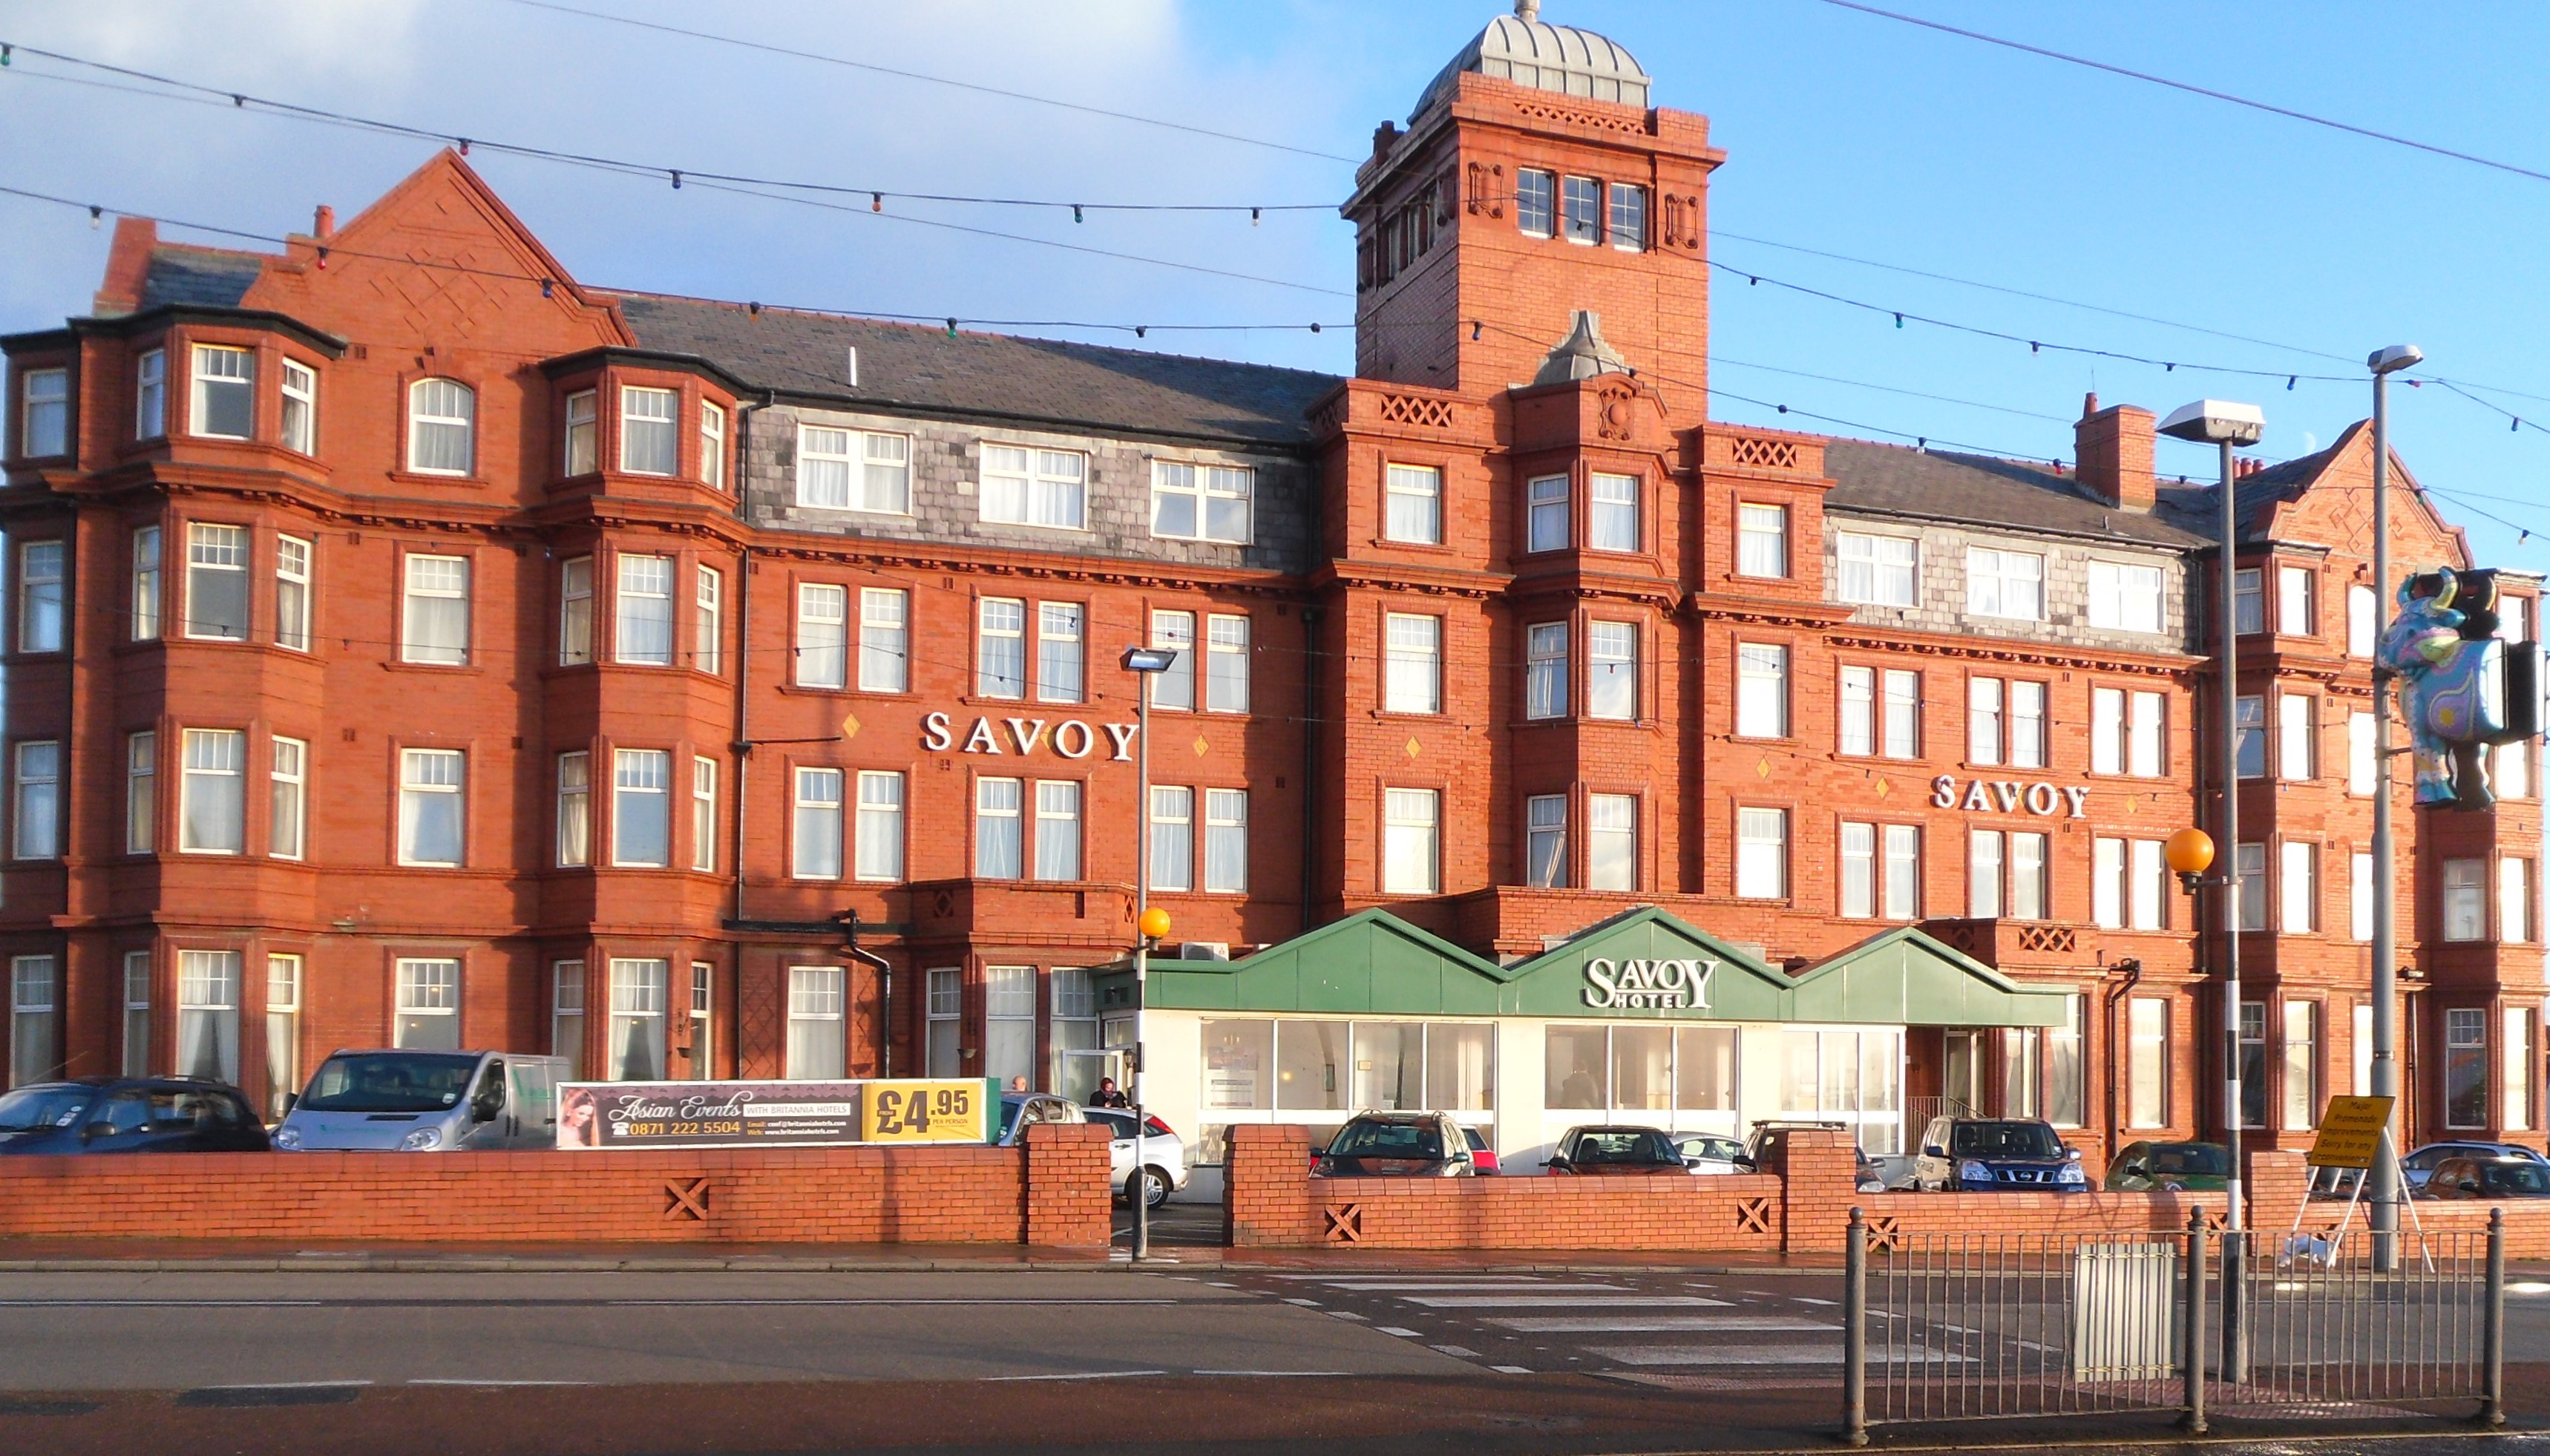 The Savoy Hotel, Blackpool